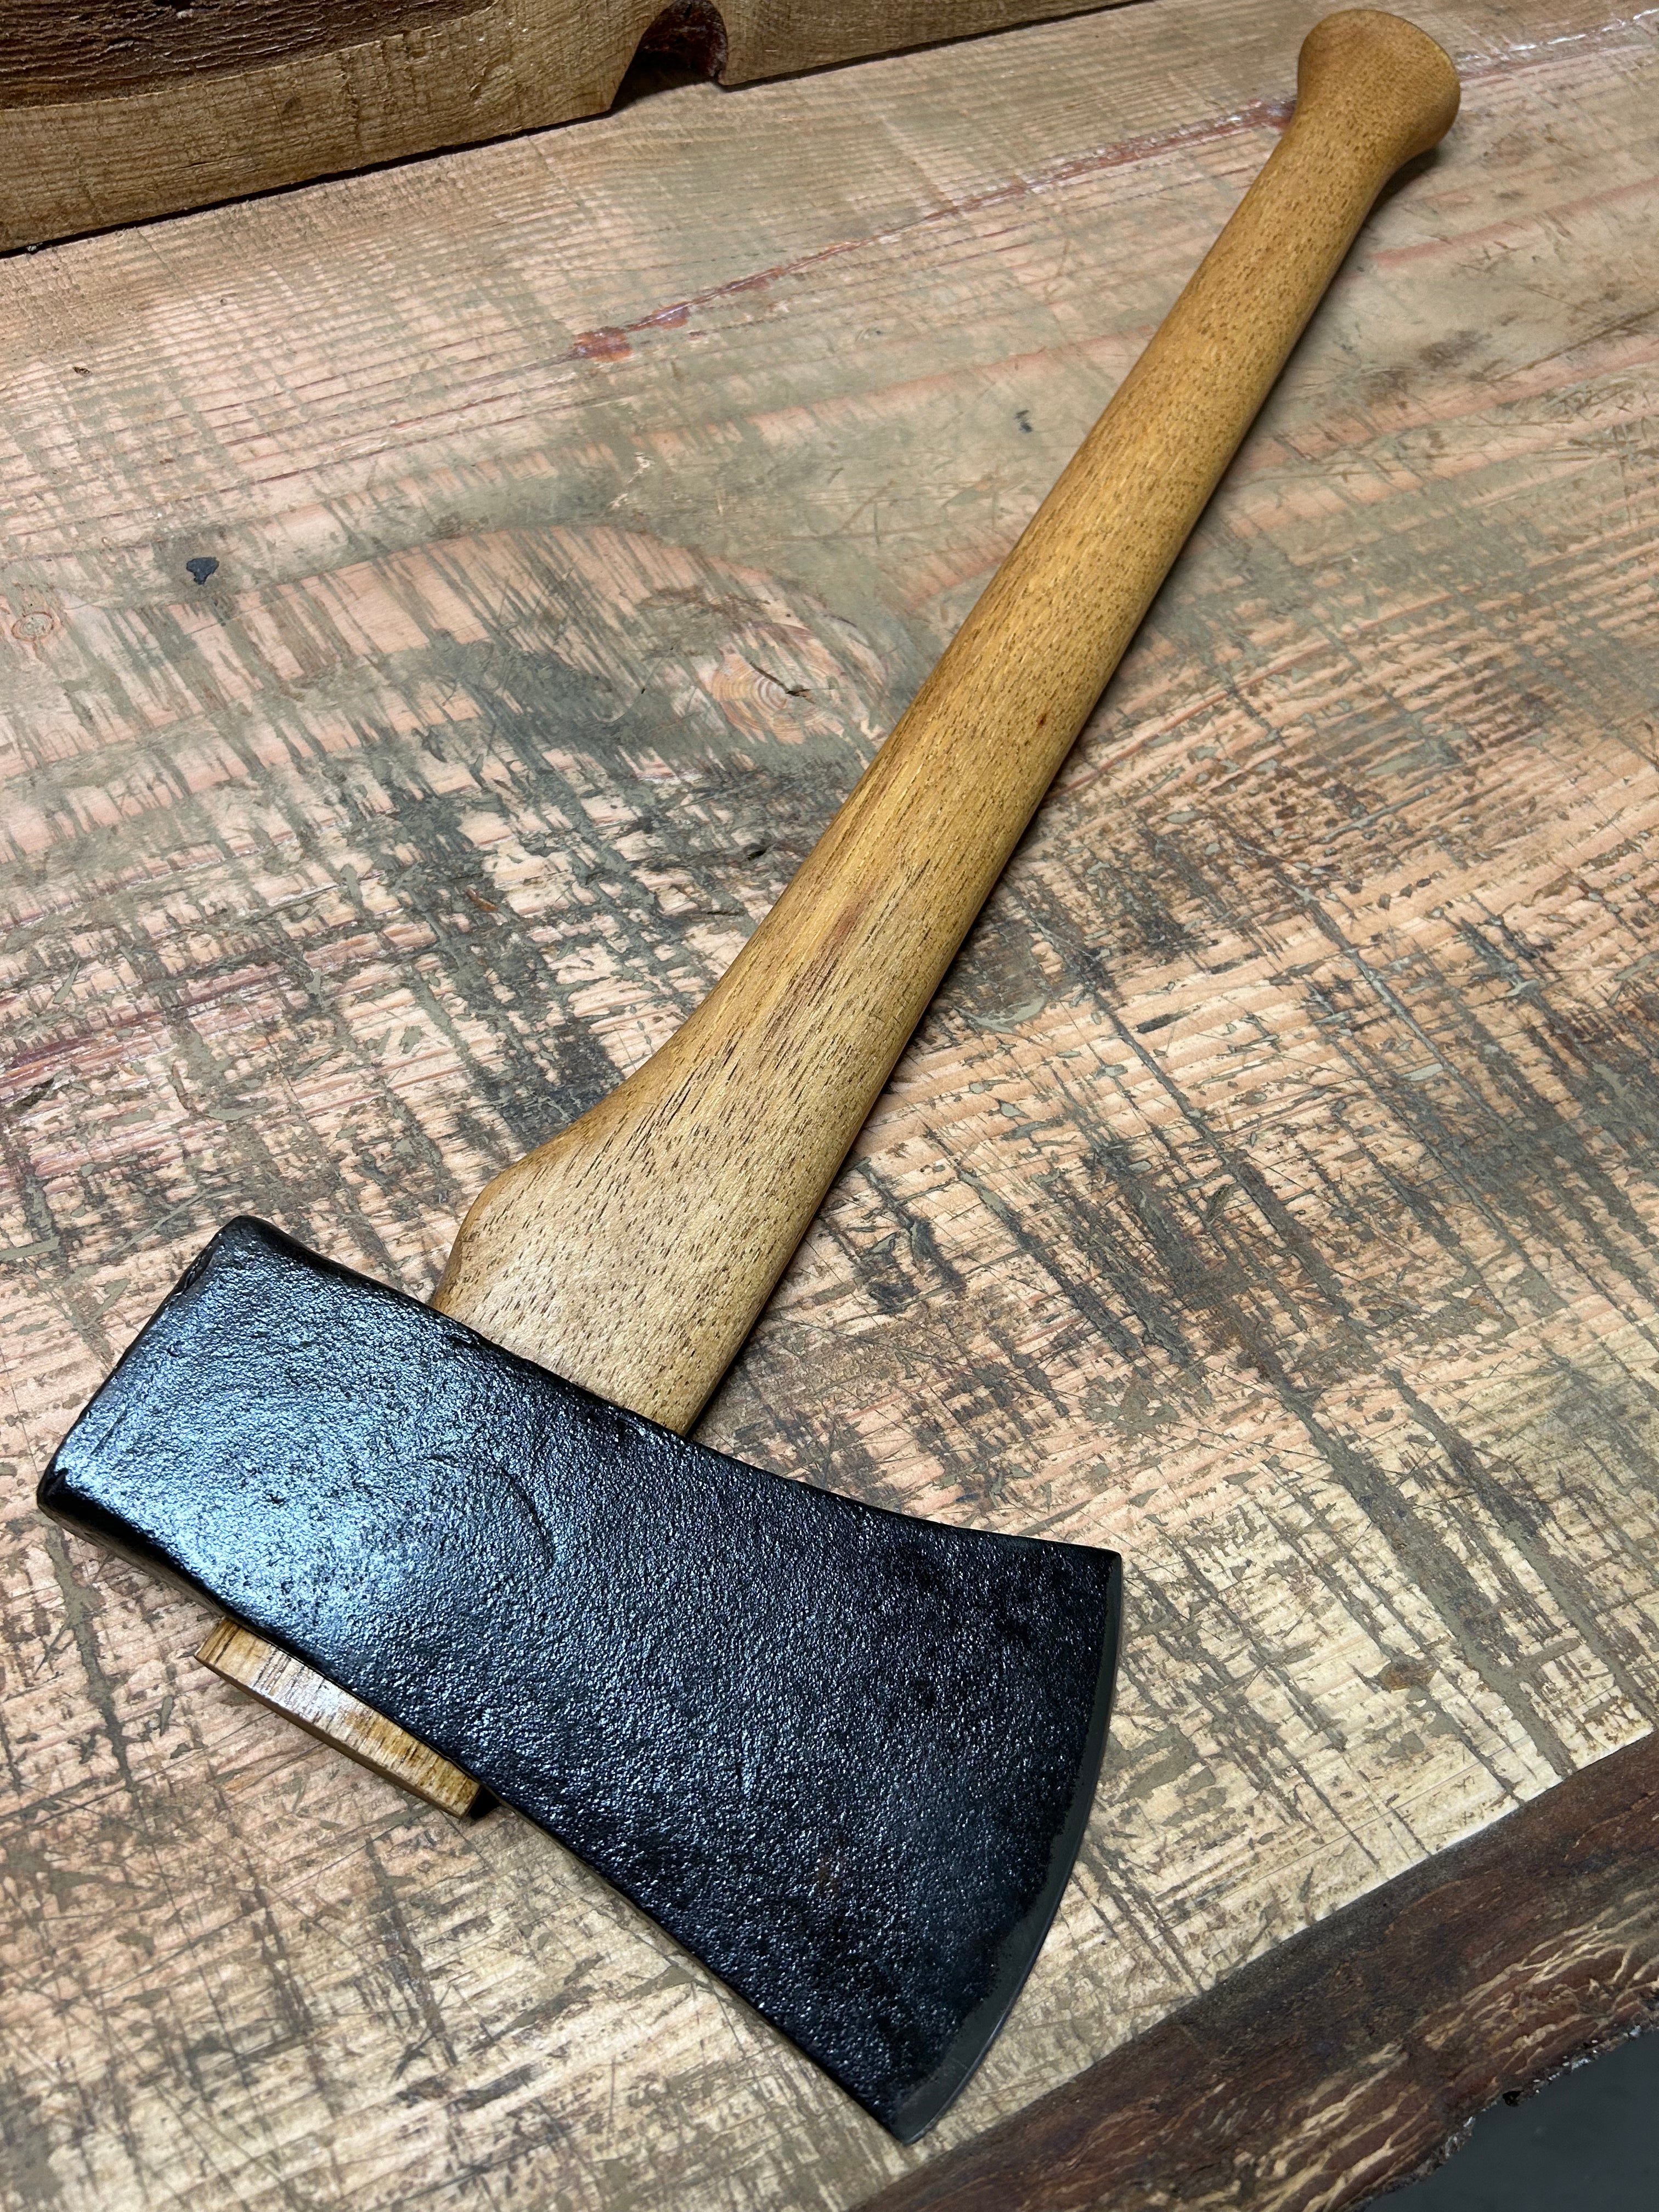 Vintage Mann 5lb Rafting axe on 25” Westcoast Saw handle